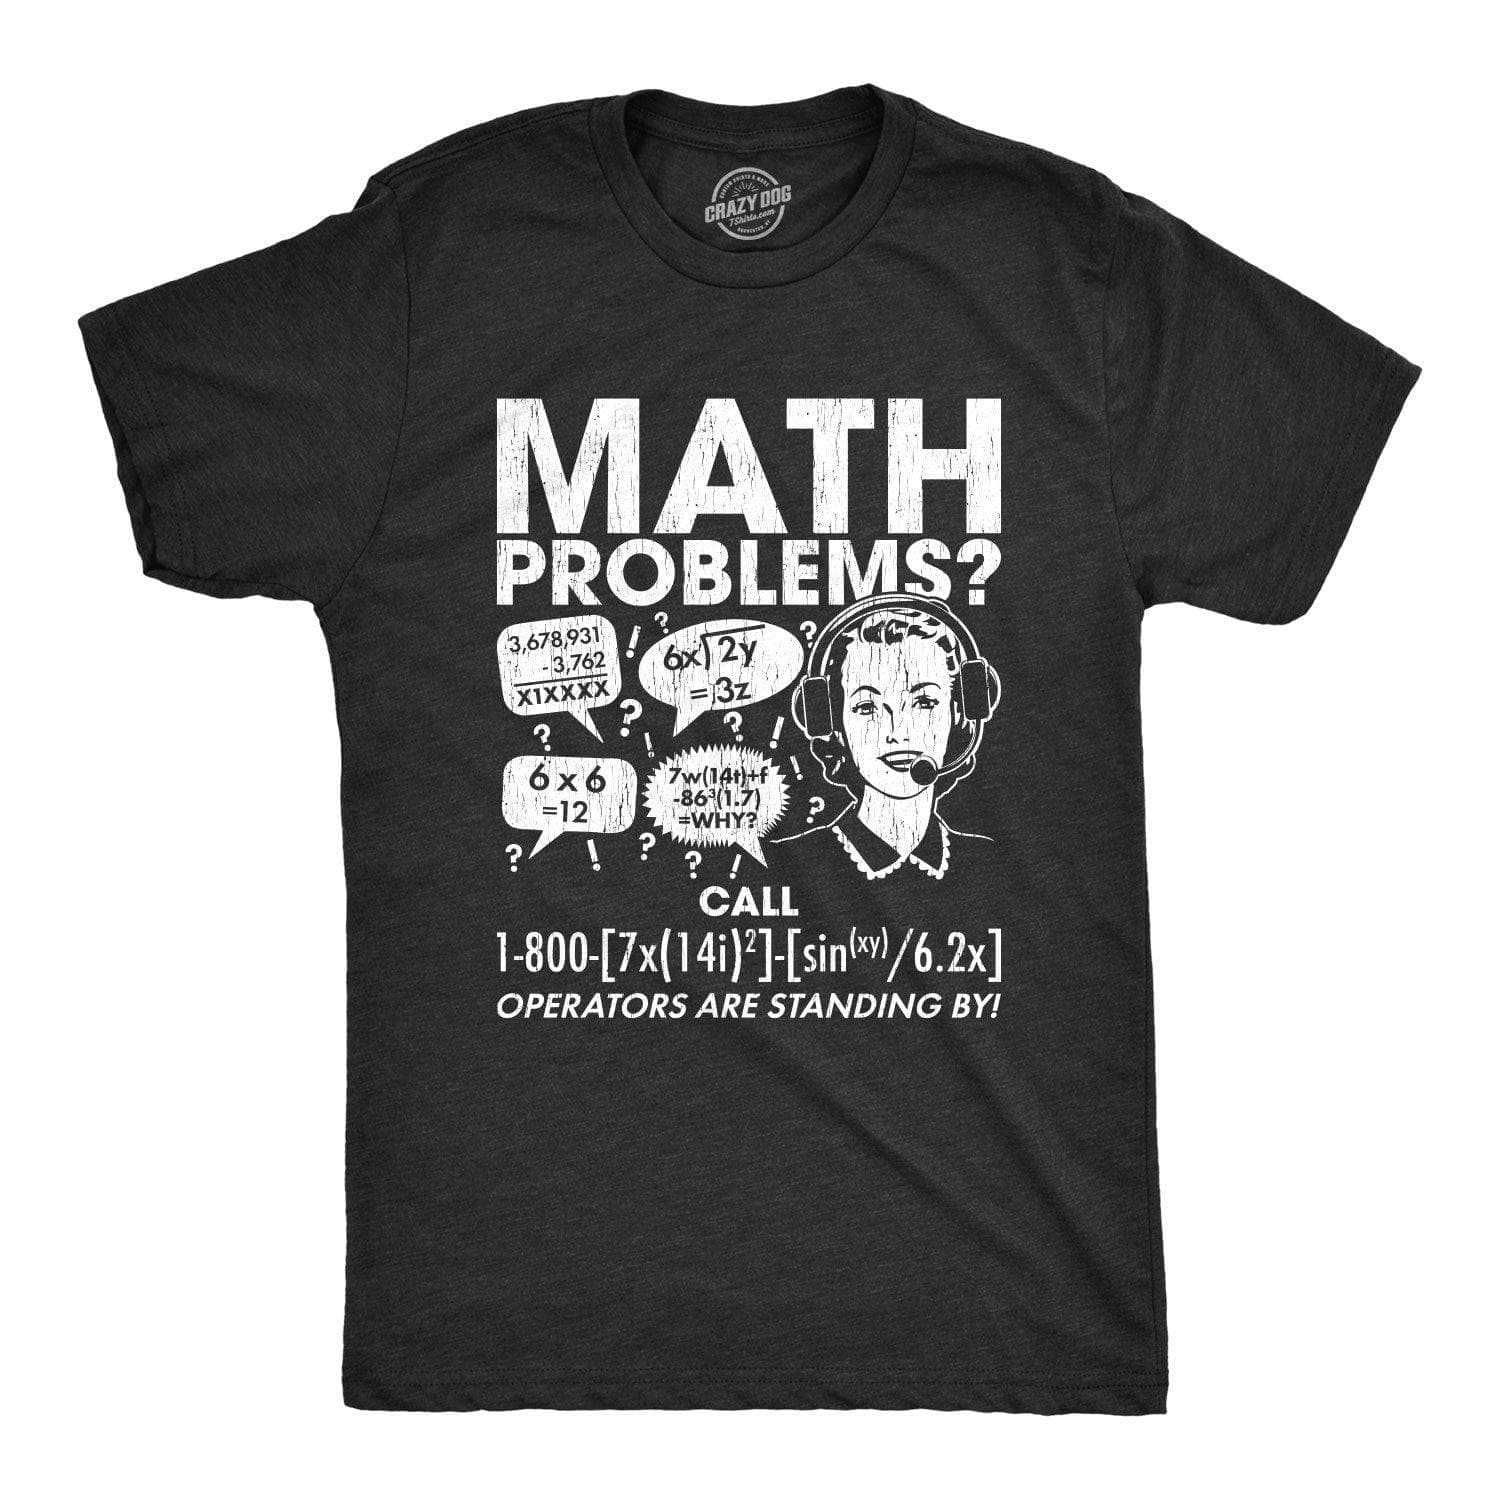 Math Problems? Men's Tshirt - Crazy Dog T-Shirts